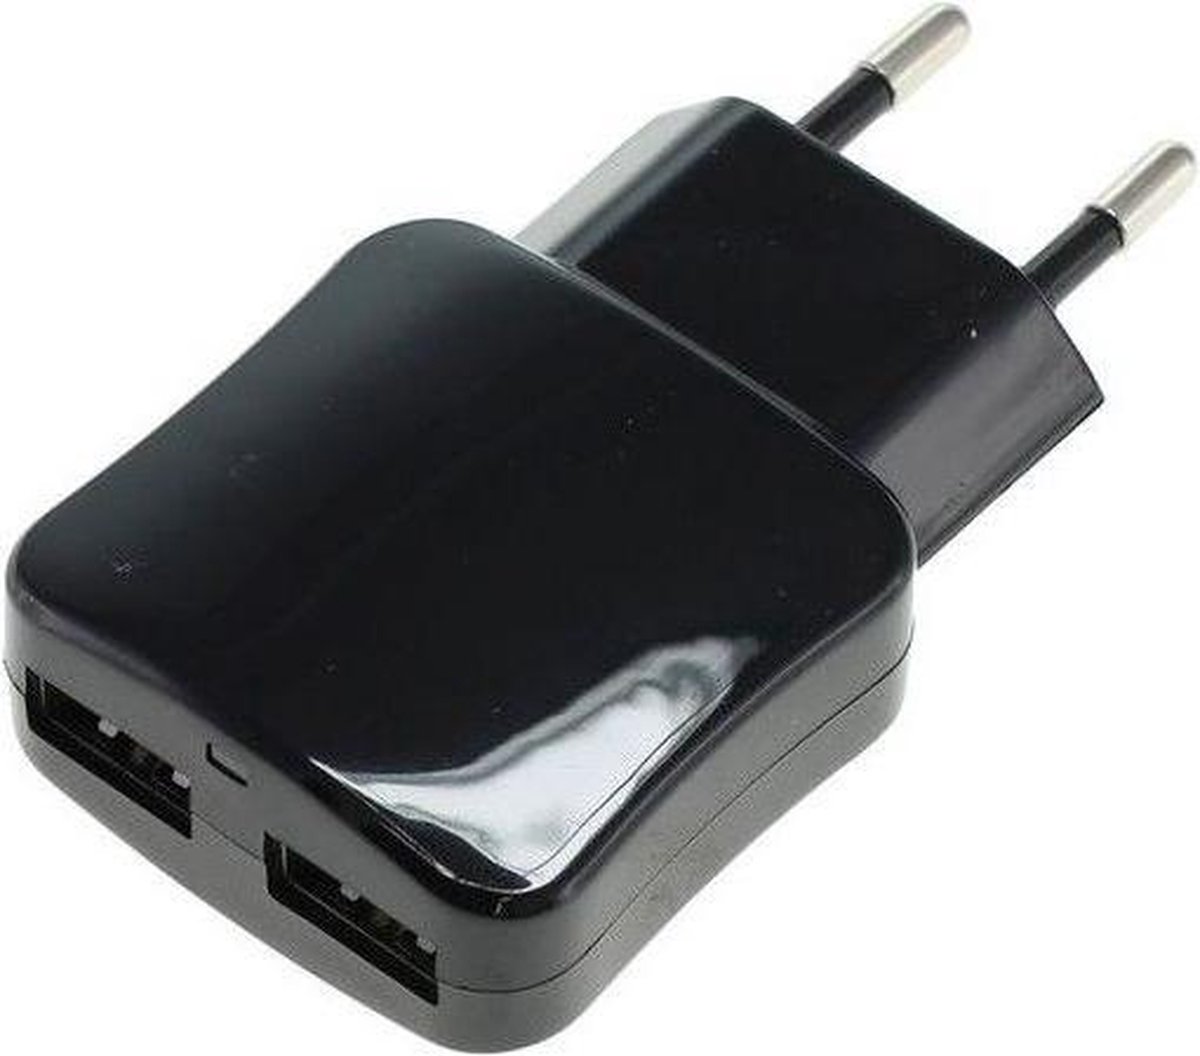 bol.com | Apple iPad Air oplader 2.1A - dubbele USB aansluiting - kleur  zwart